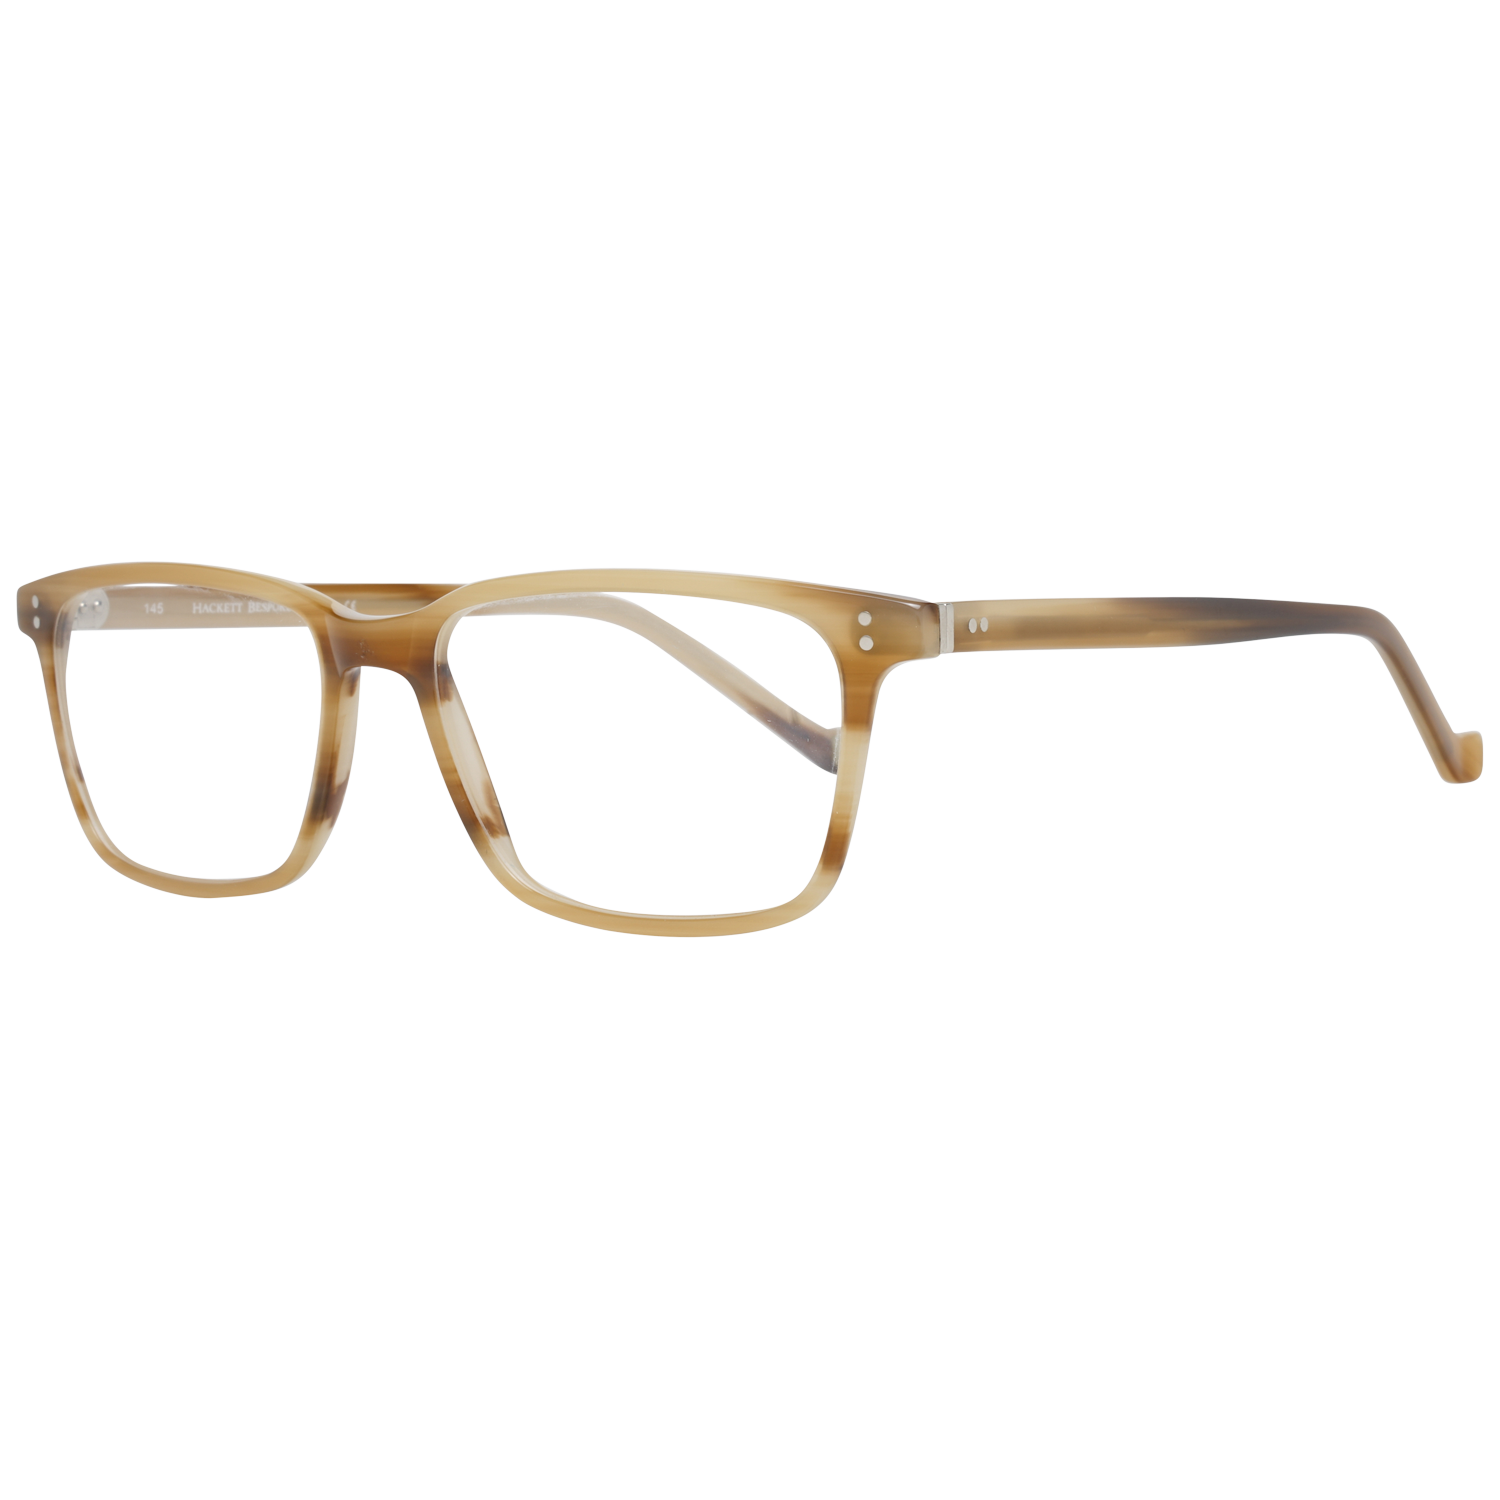 Hackett Frames Hackett Bespoke Glasses Optical Frame HEB182 187 53 Eyeglasses Eyewear UK USA Australia 